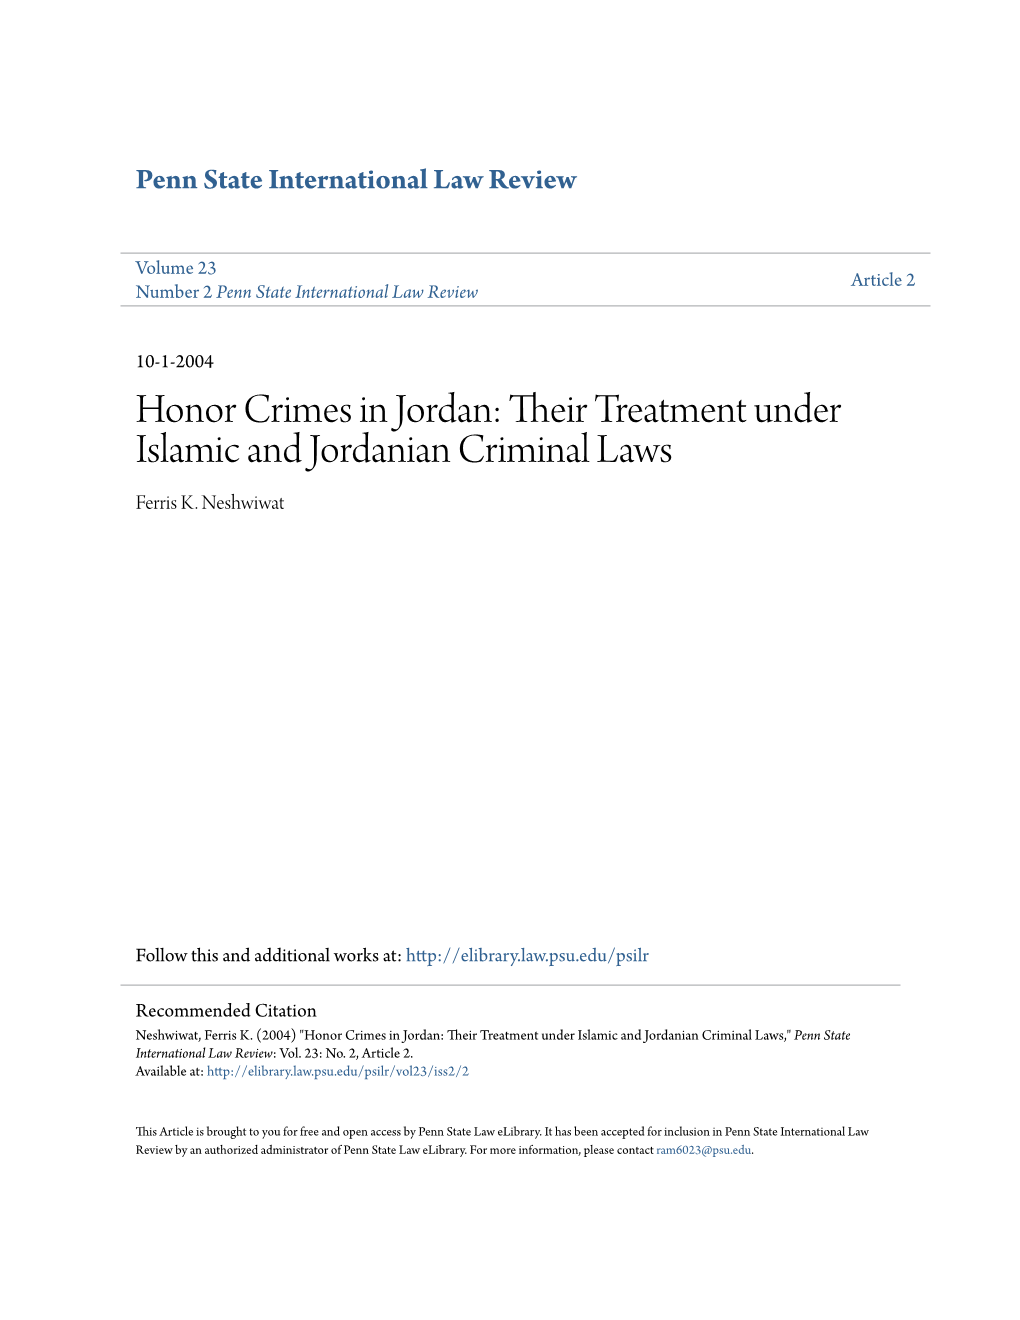 Honor Crimes in Jordan: Their Rt Eatment Under Islamic and Jordanian Criminal Laws Ferris K